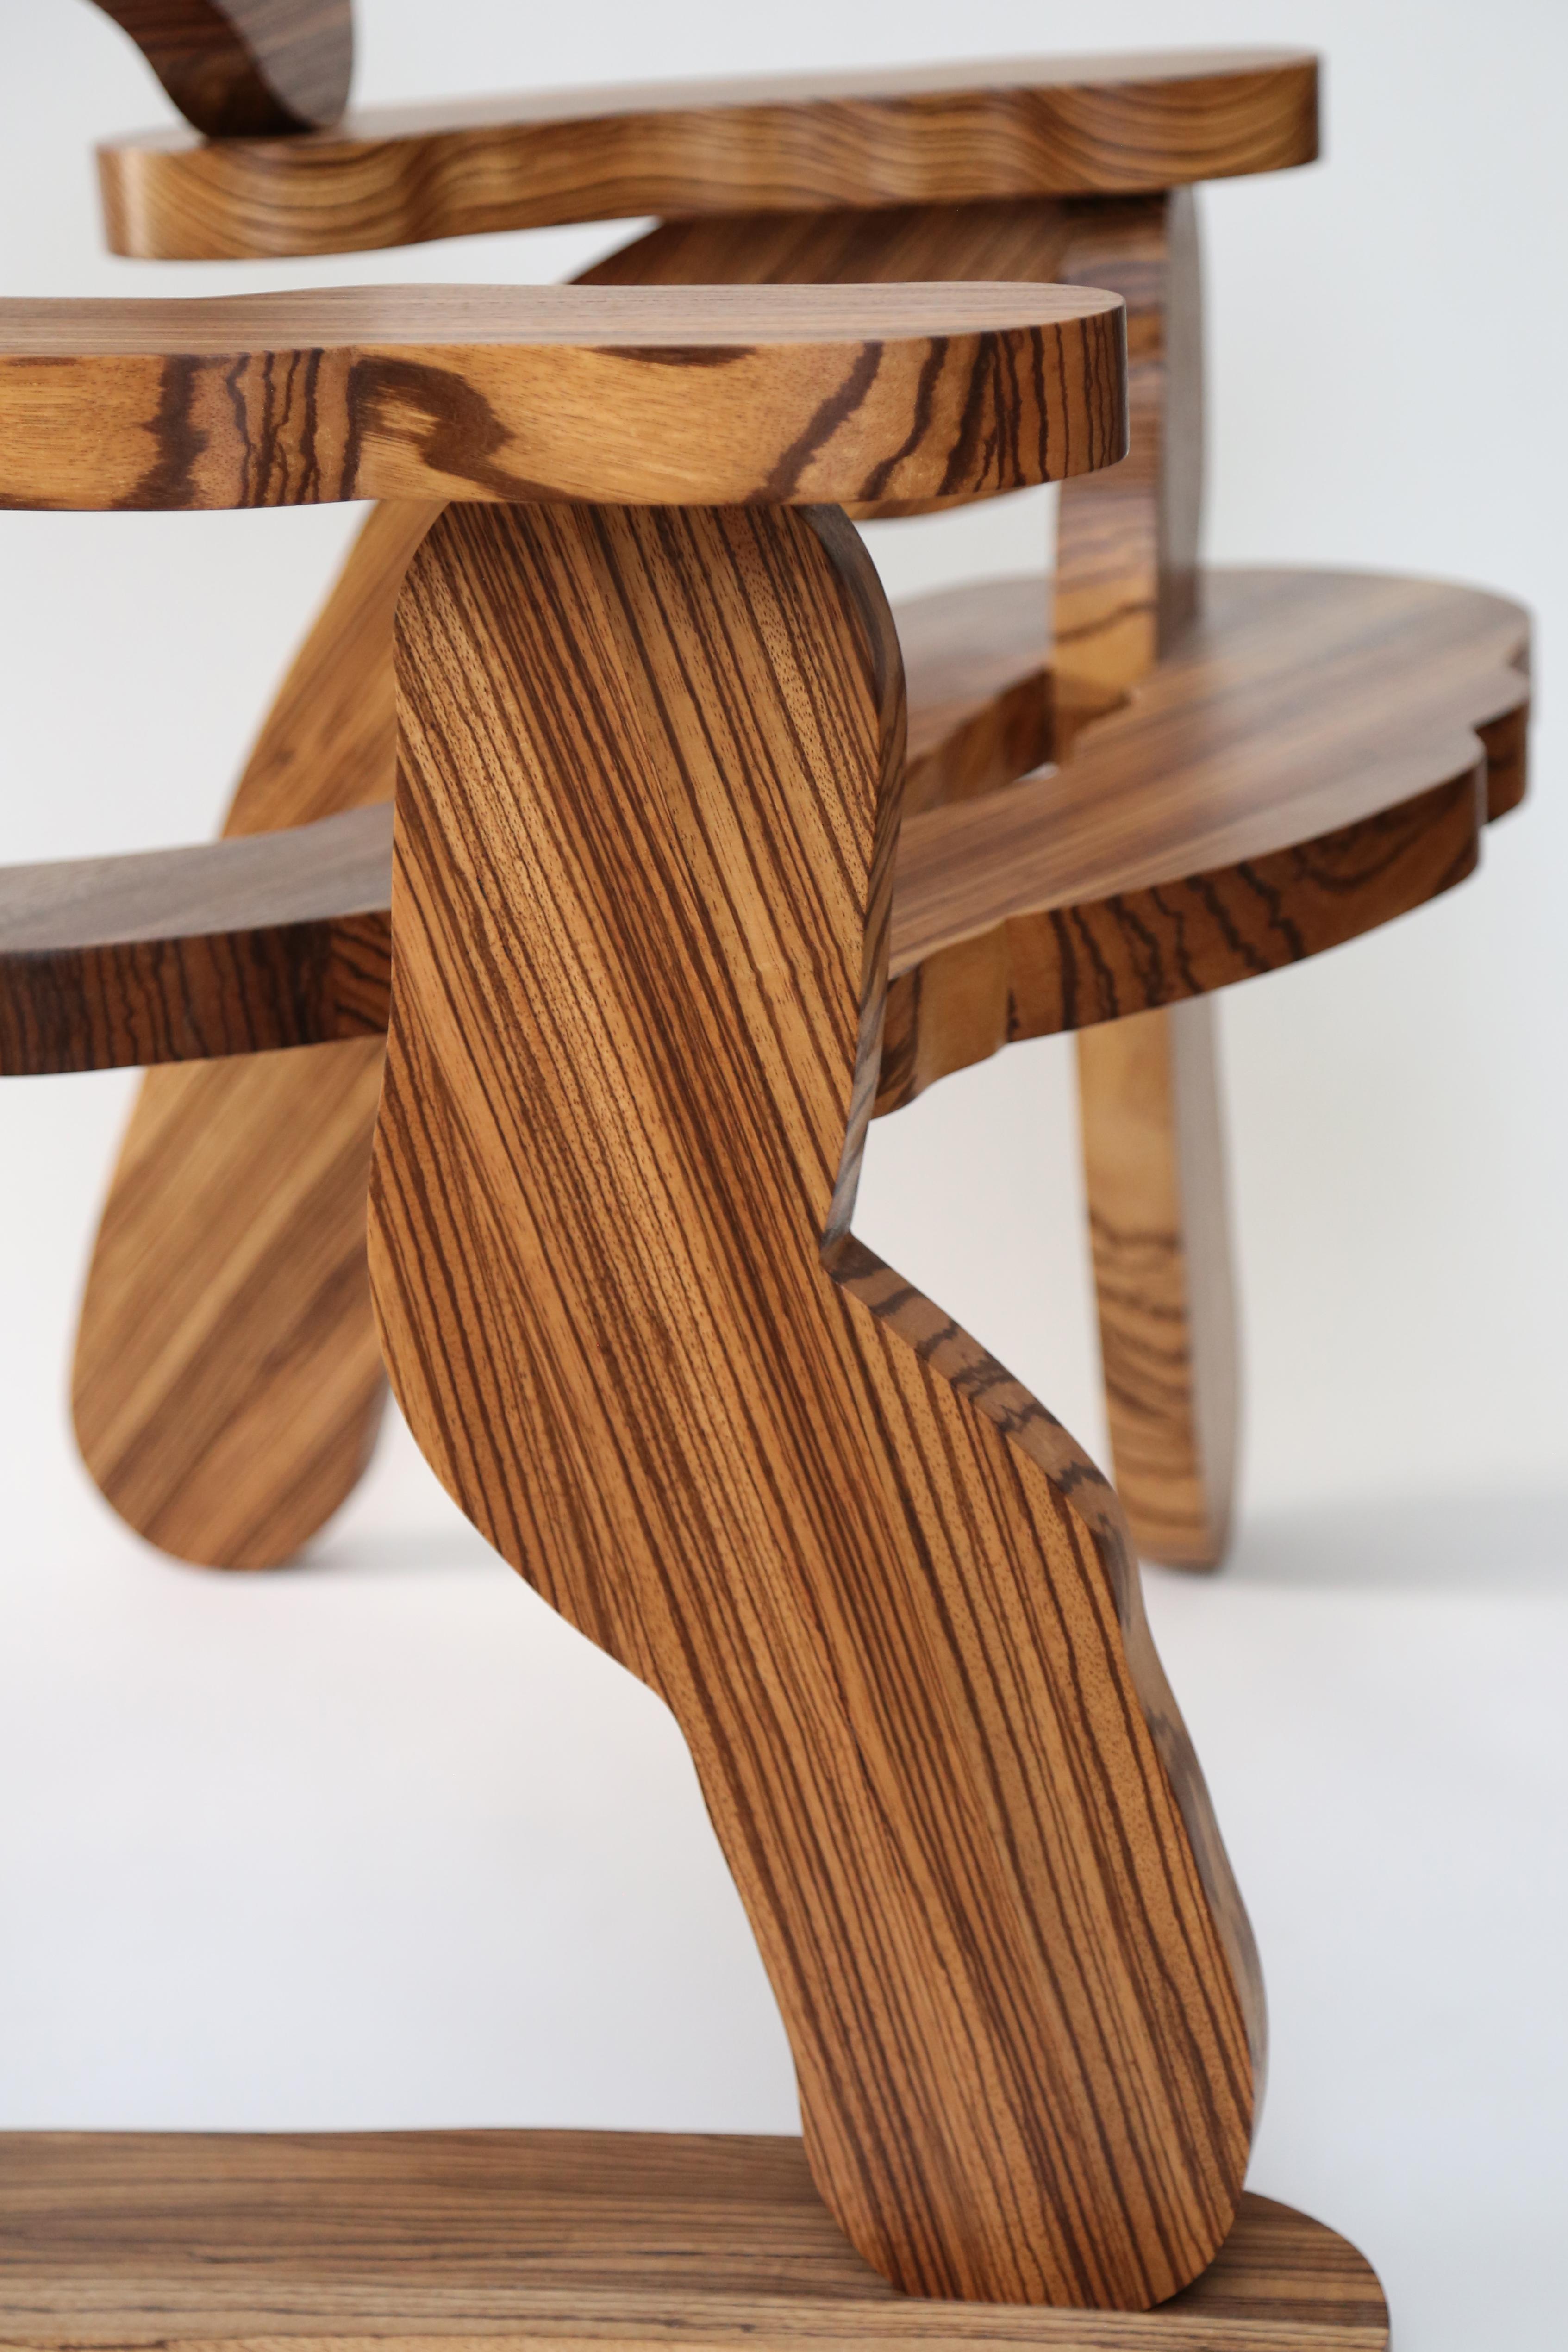 Zebra Wood Contemporary Zebrano Wood Armchair by Soft Baroque